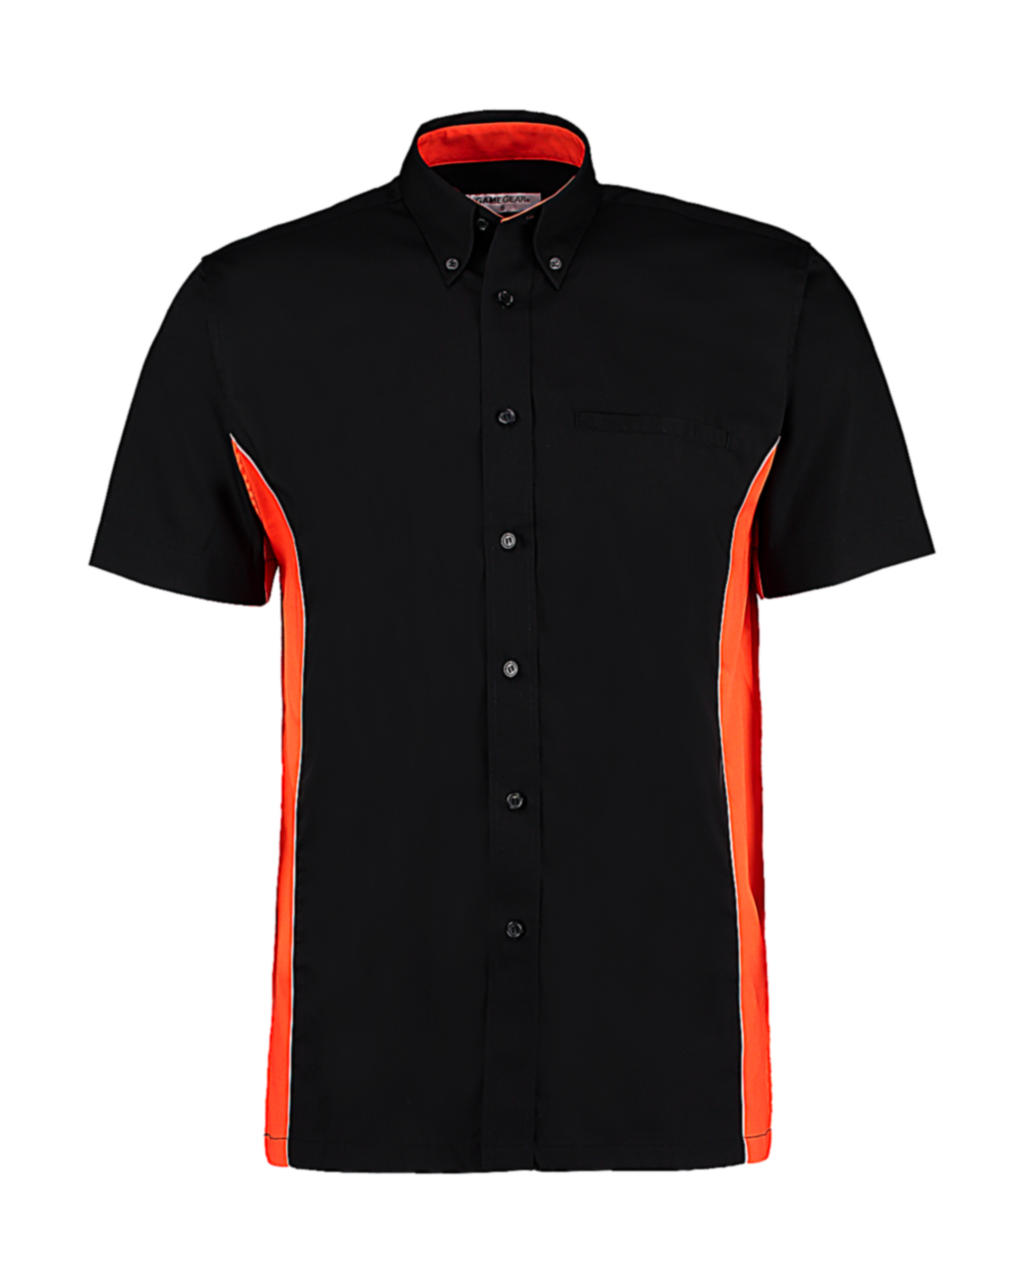  Classic Fit Sportsman Shirt SSL in Farbe Black/Orange/White